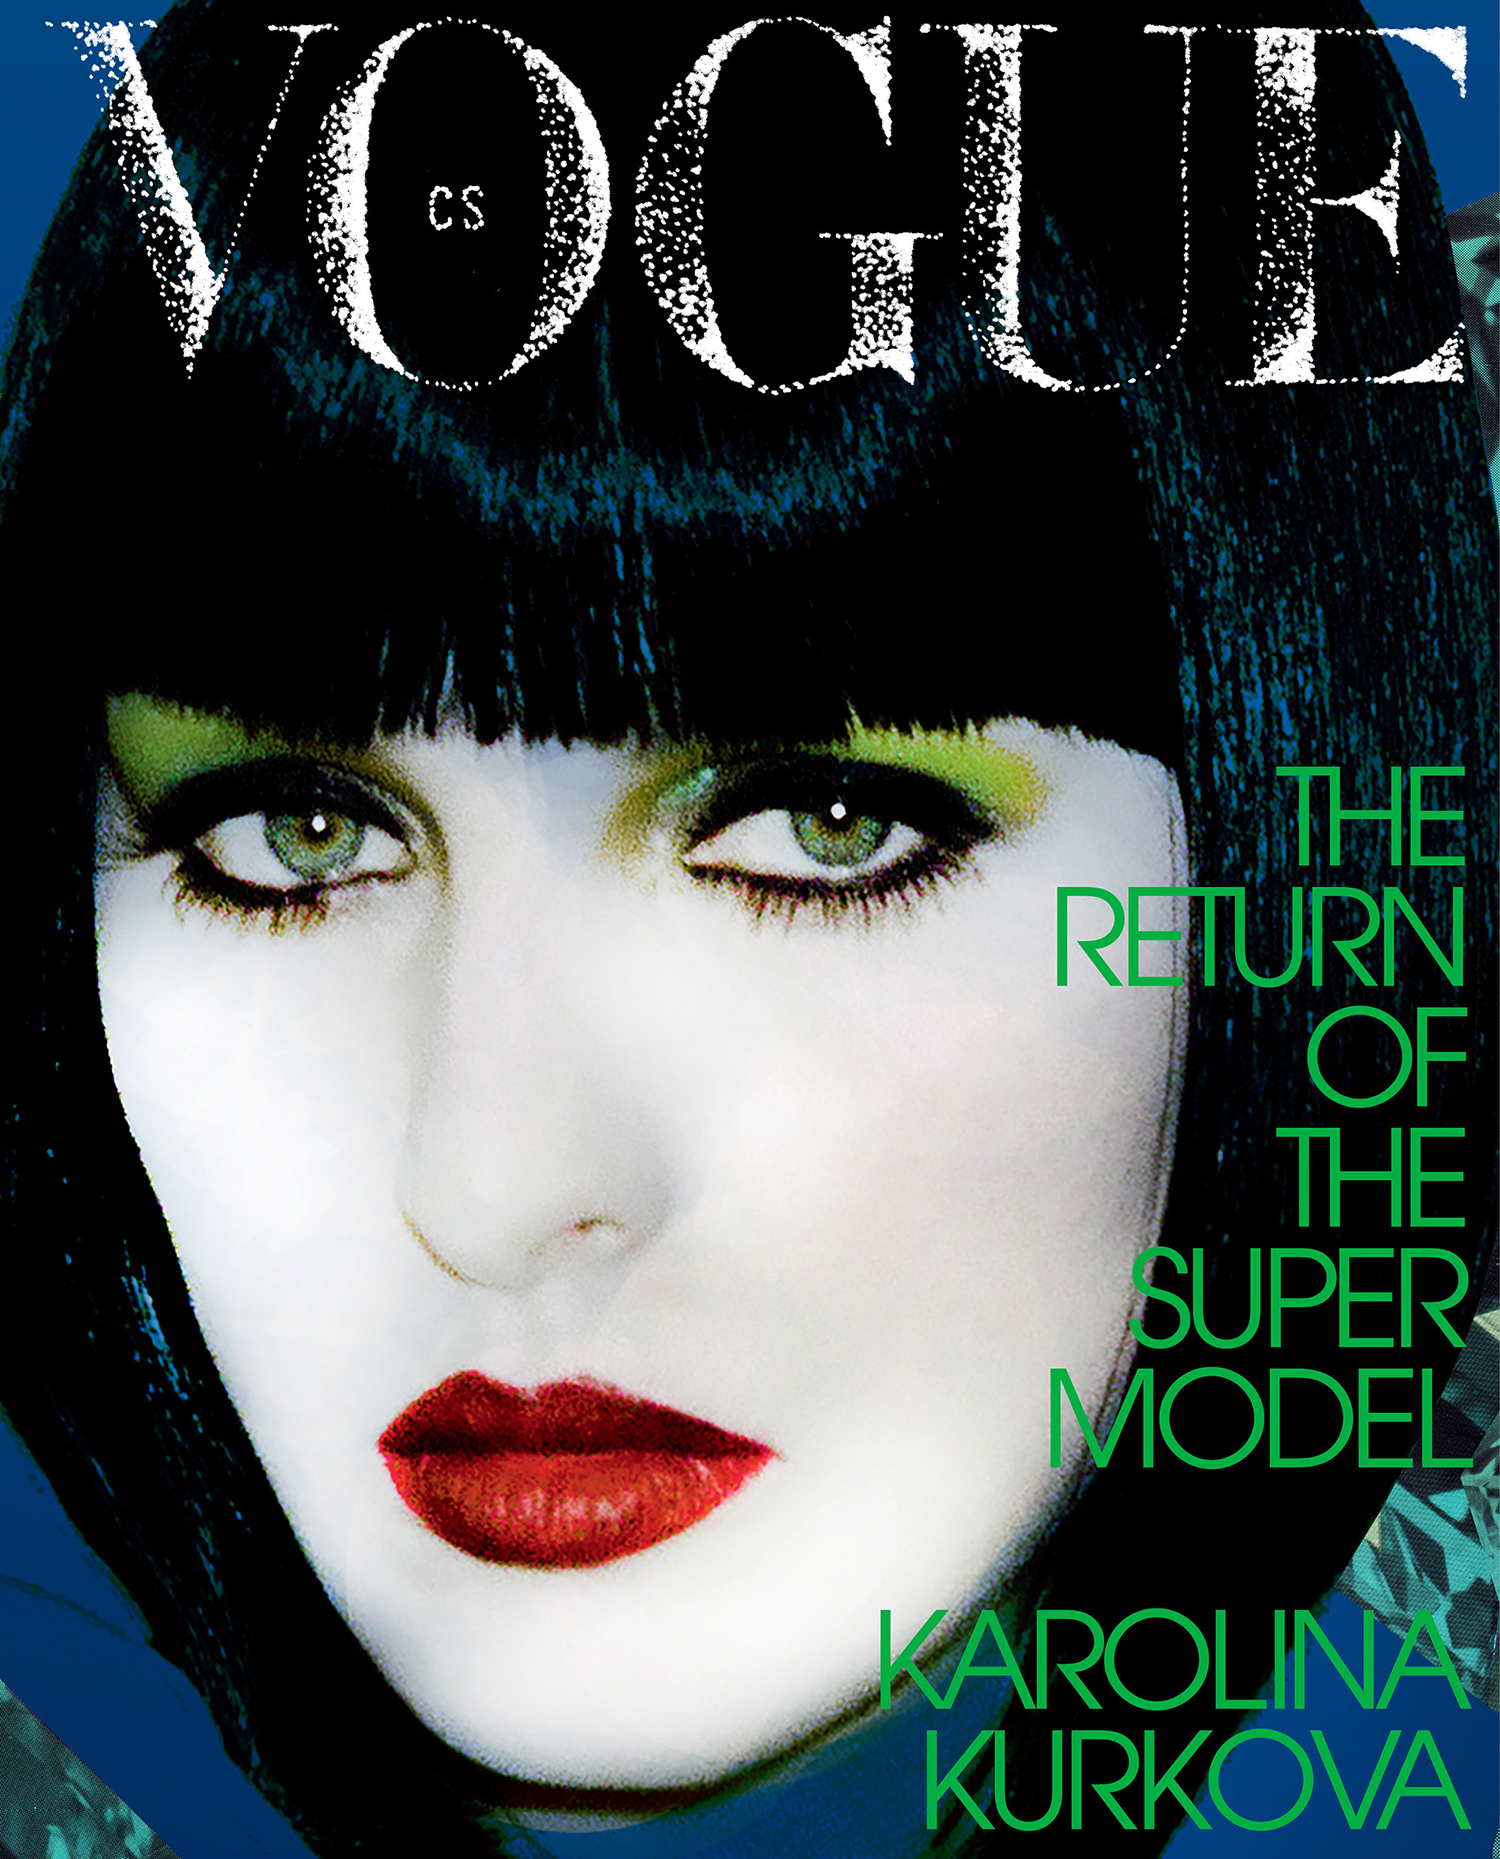 Karolina Kurkova covers Vogue Czechoslovakia October 2021 by Marcus Cooper